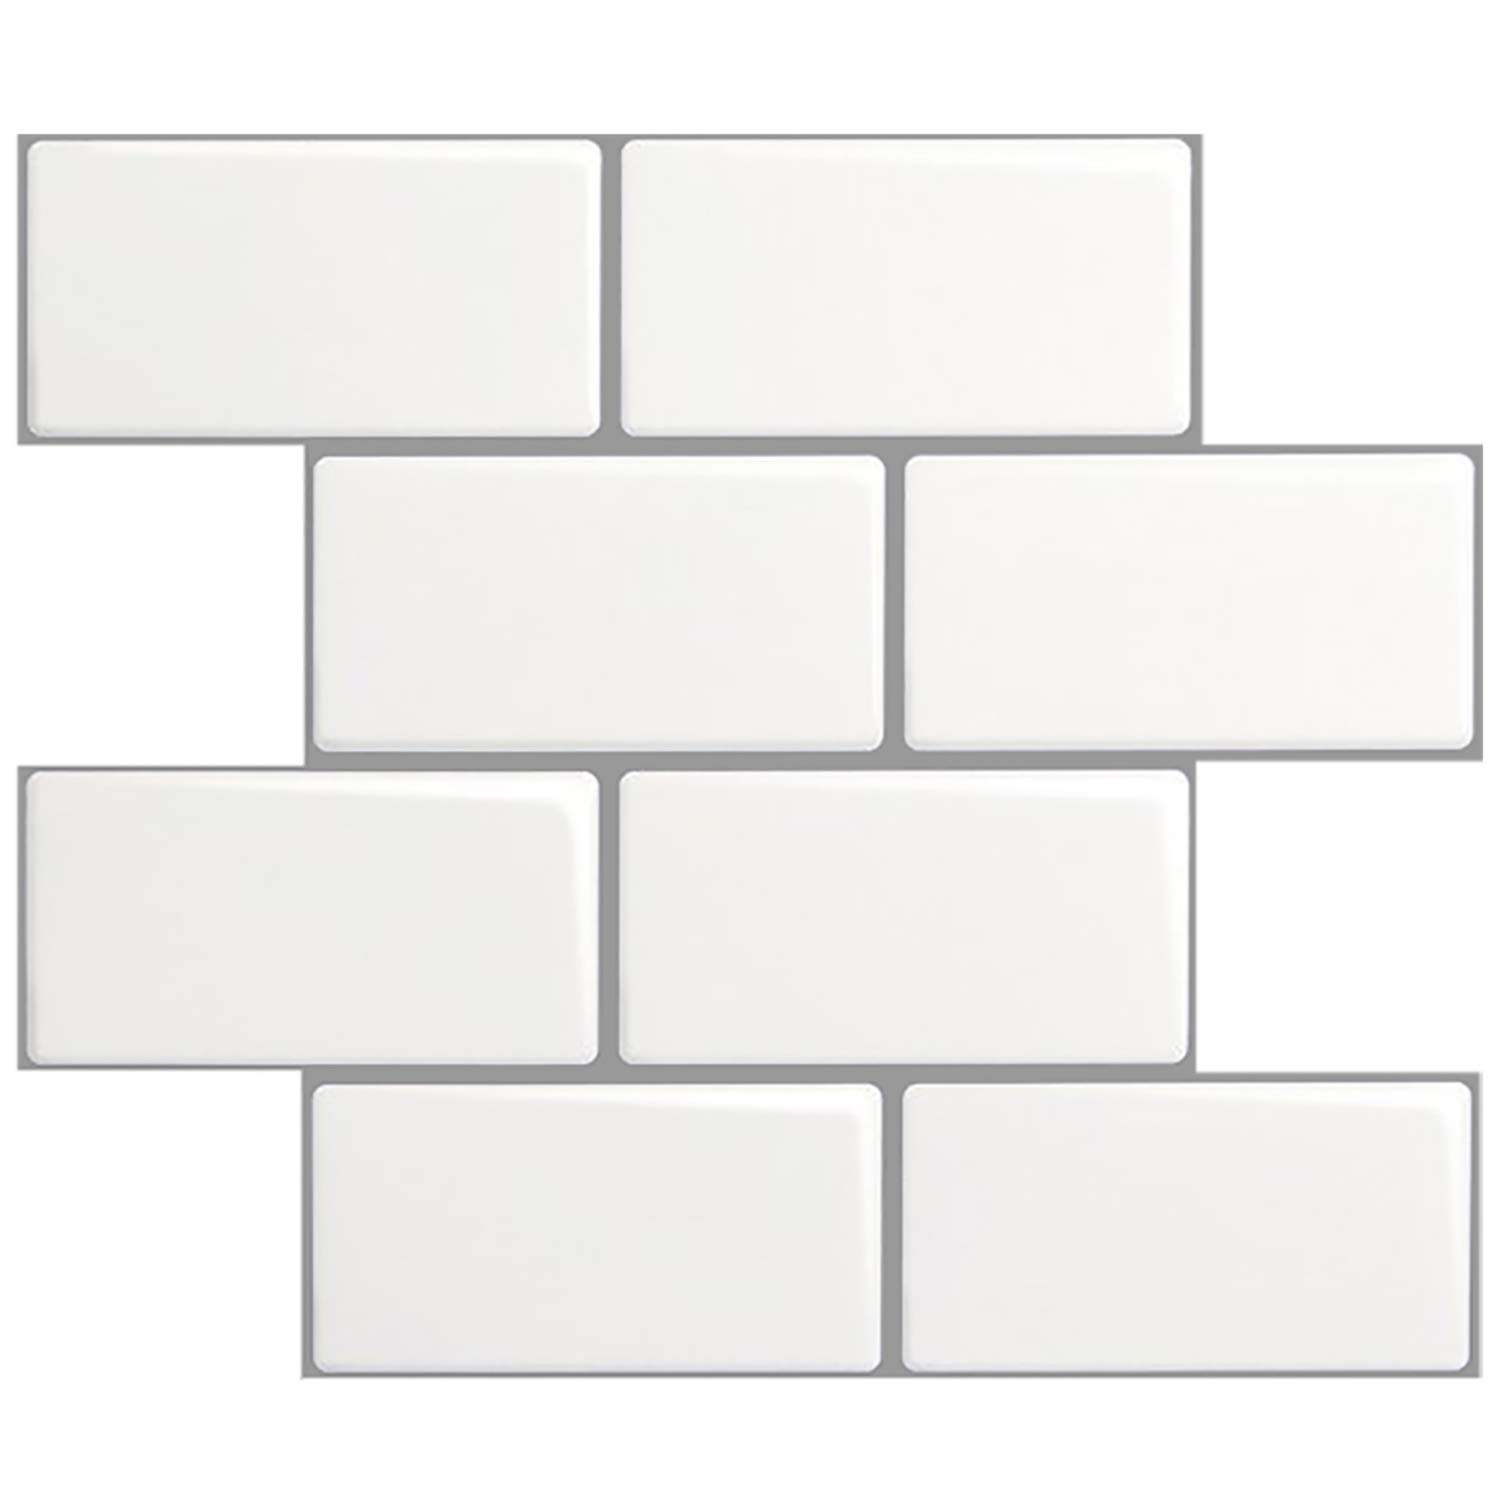 A17601 -10 SF Self-Adhesive Backsplash Tiles, Faux Marble Tiles